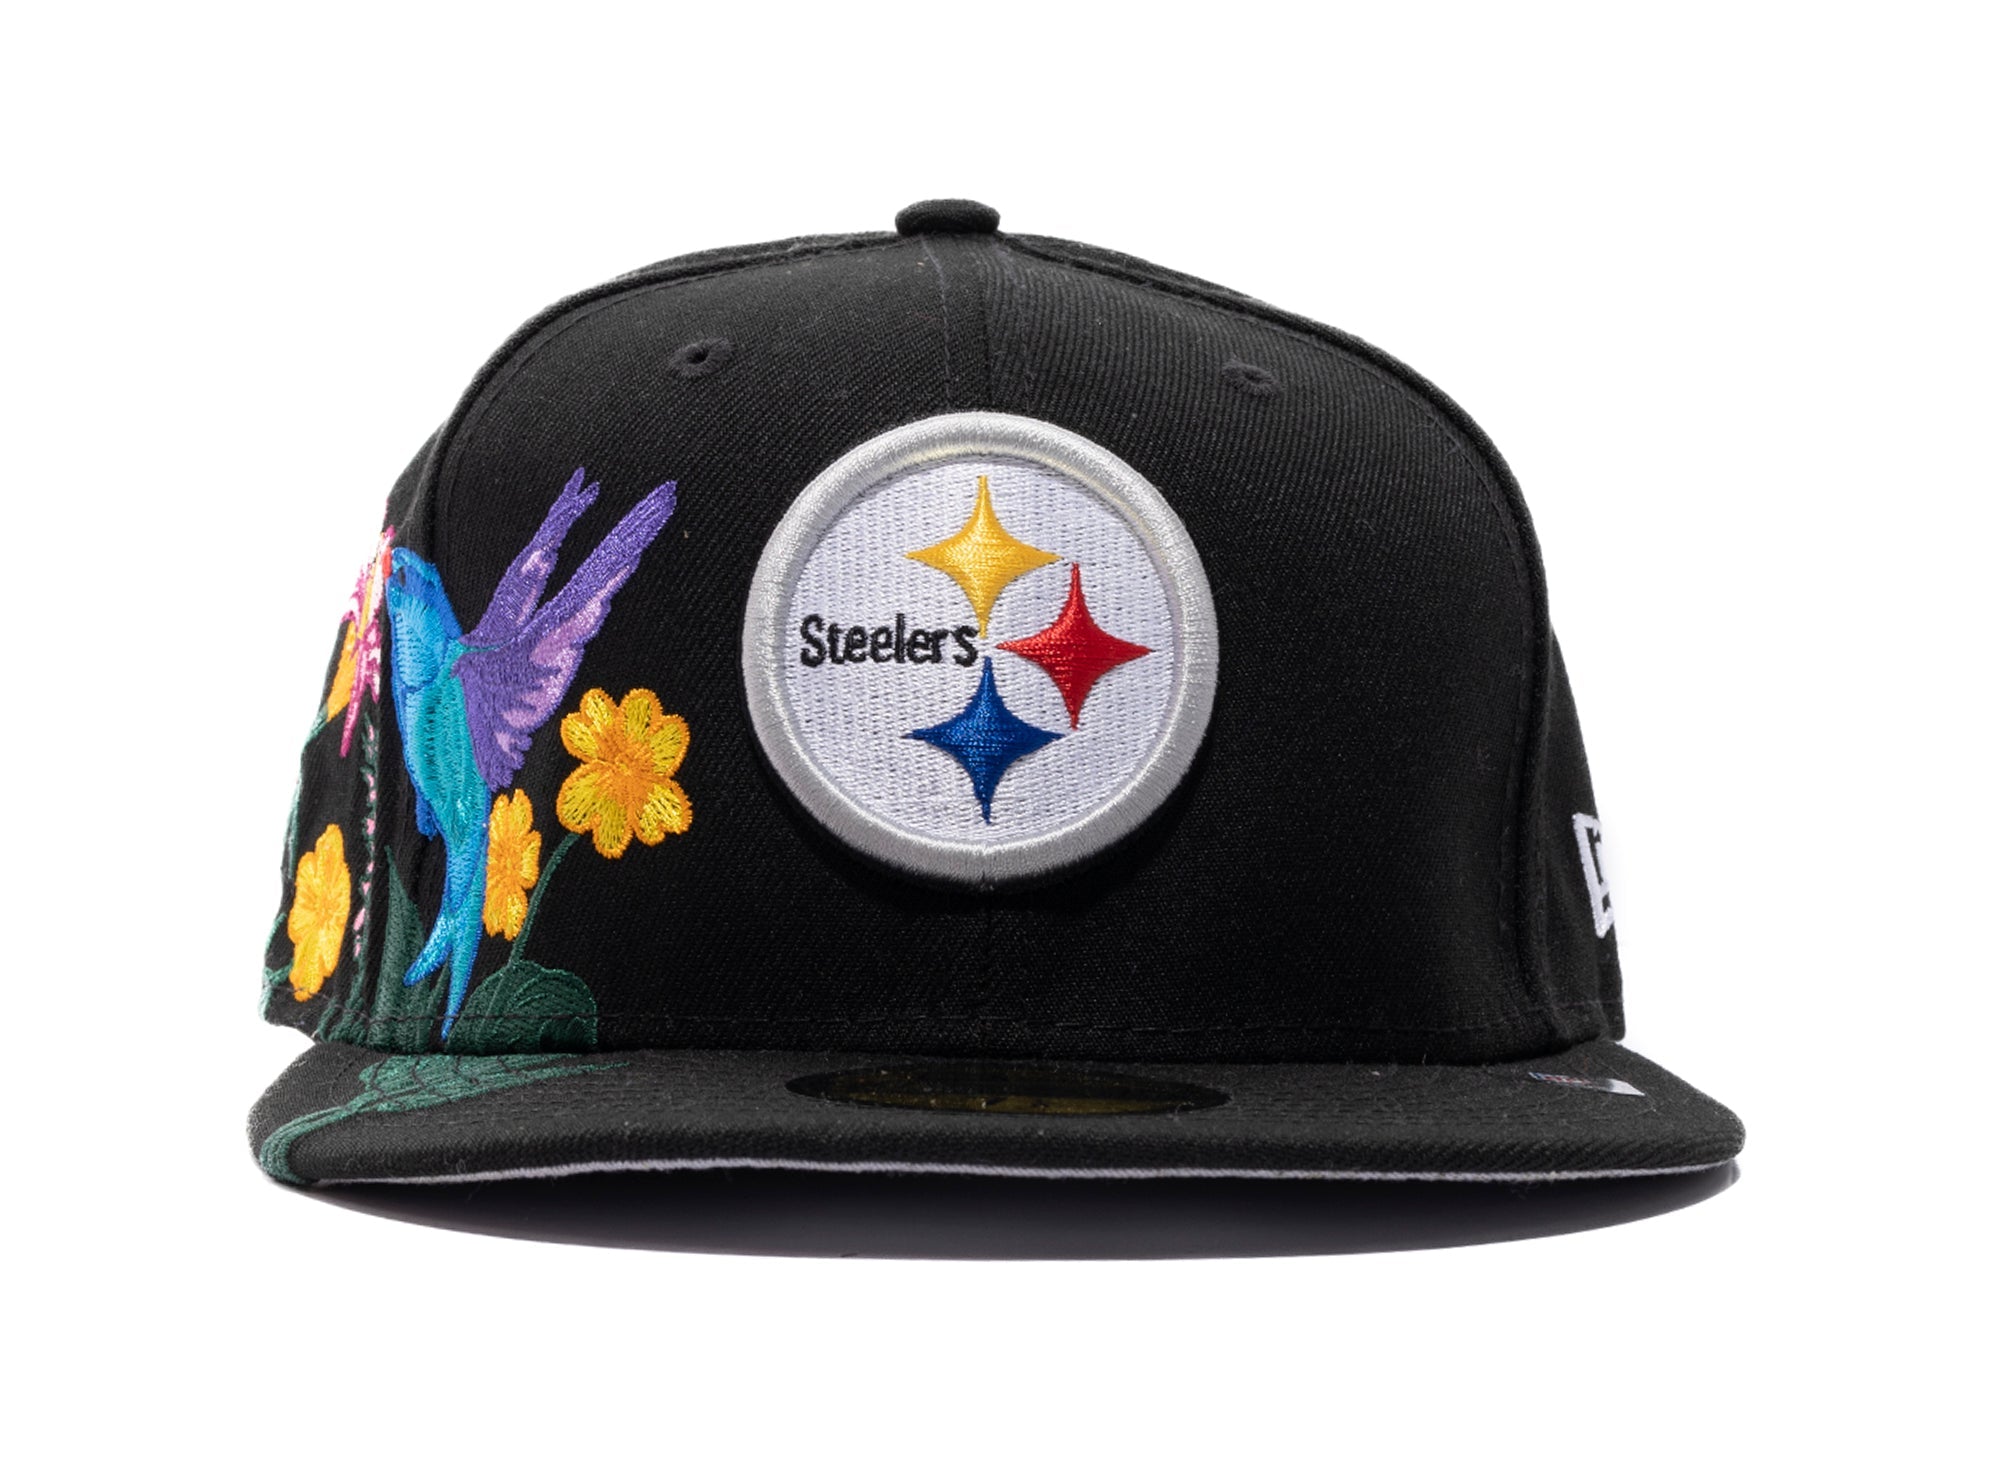 Pittsburgh Steelers 5950 Black White Hat